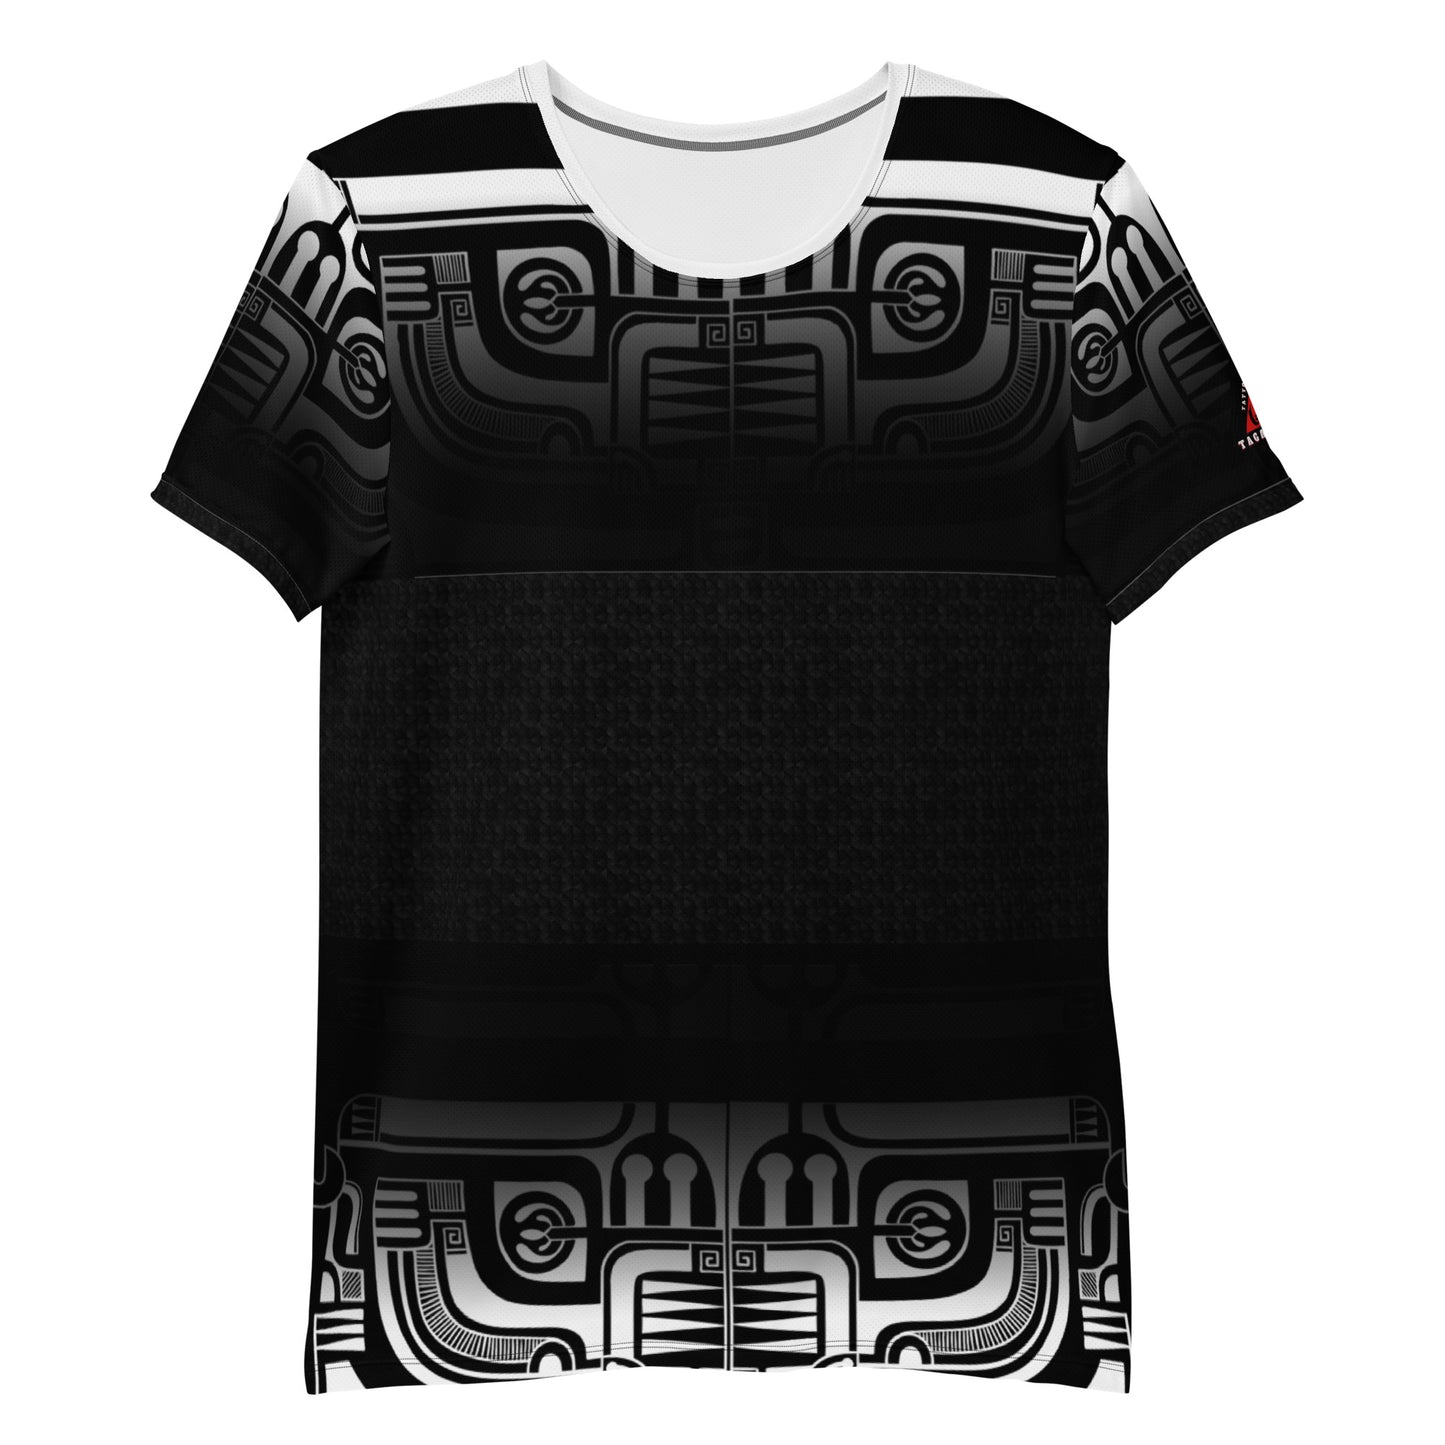 Patutiki Black and White Gradient Sport T-shirt